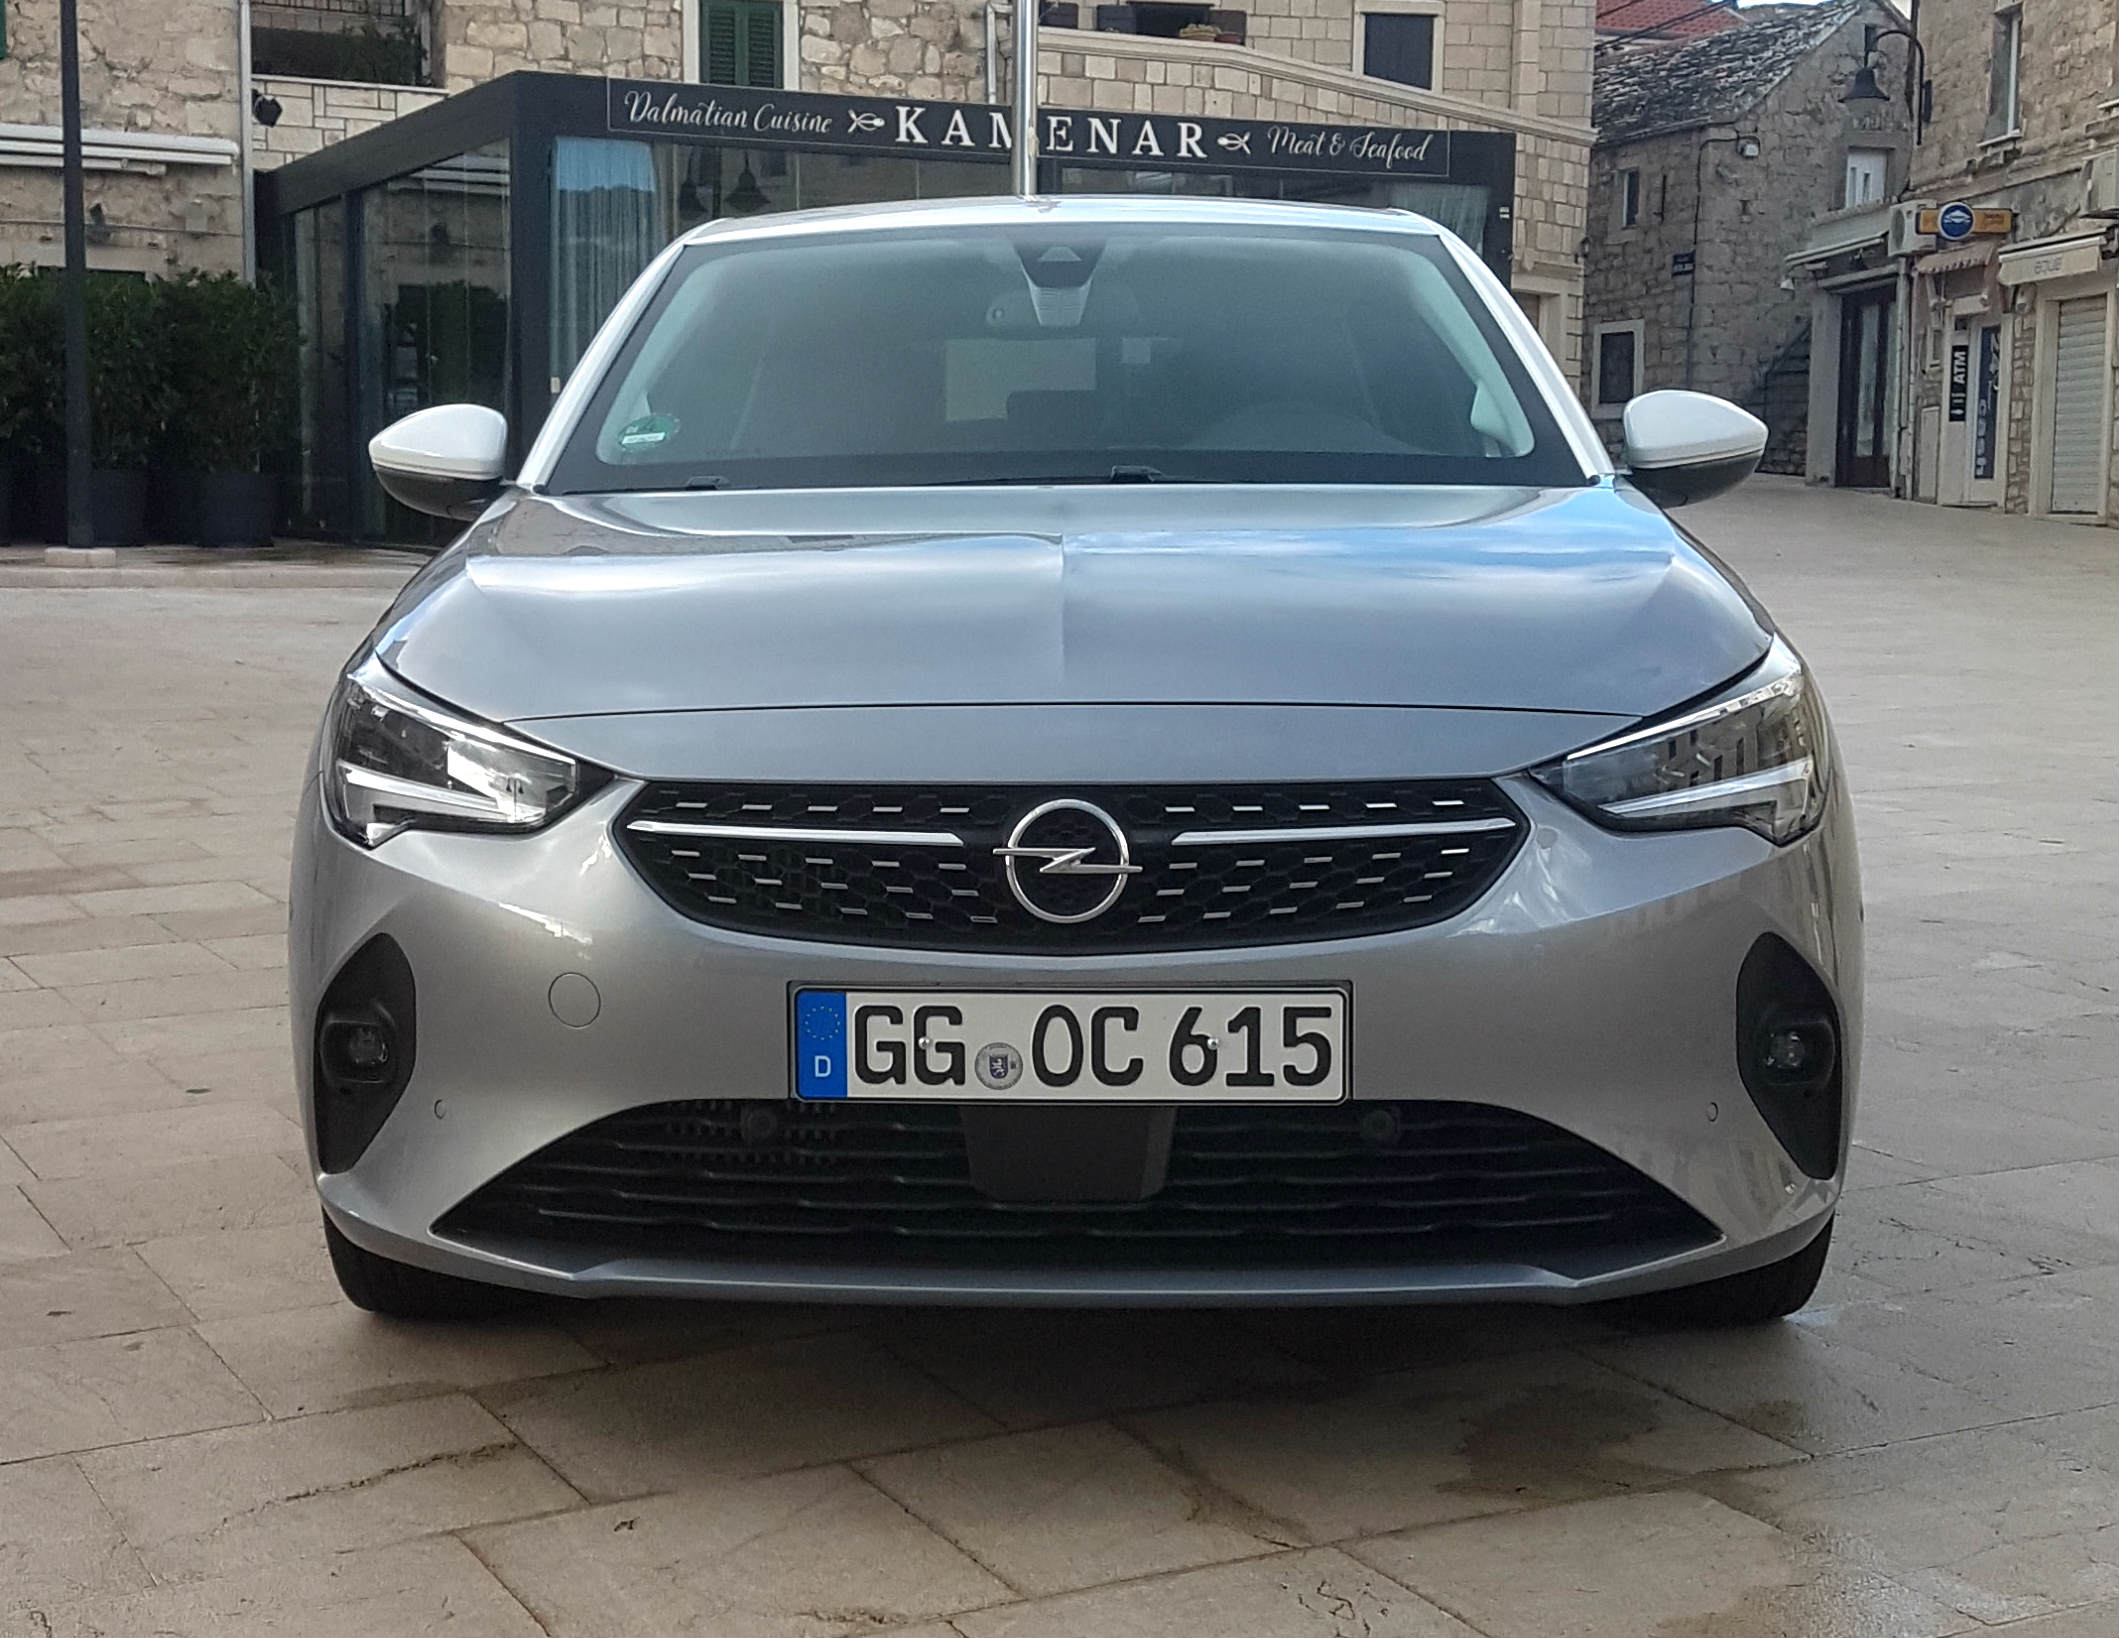 Opel Corsa test